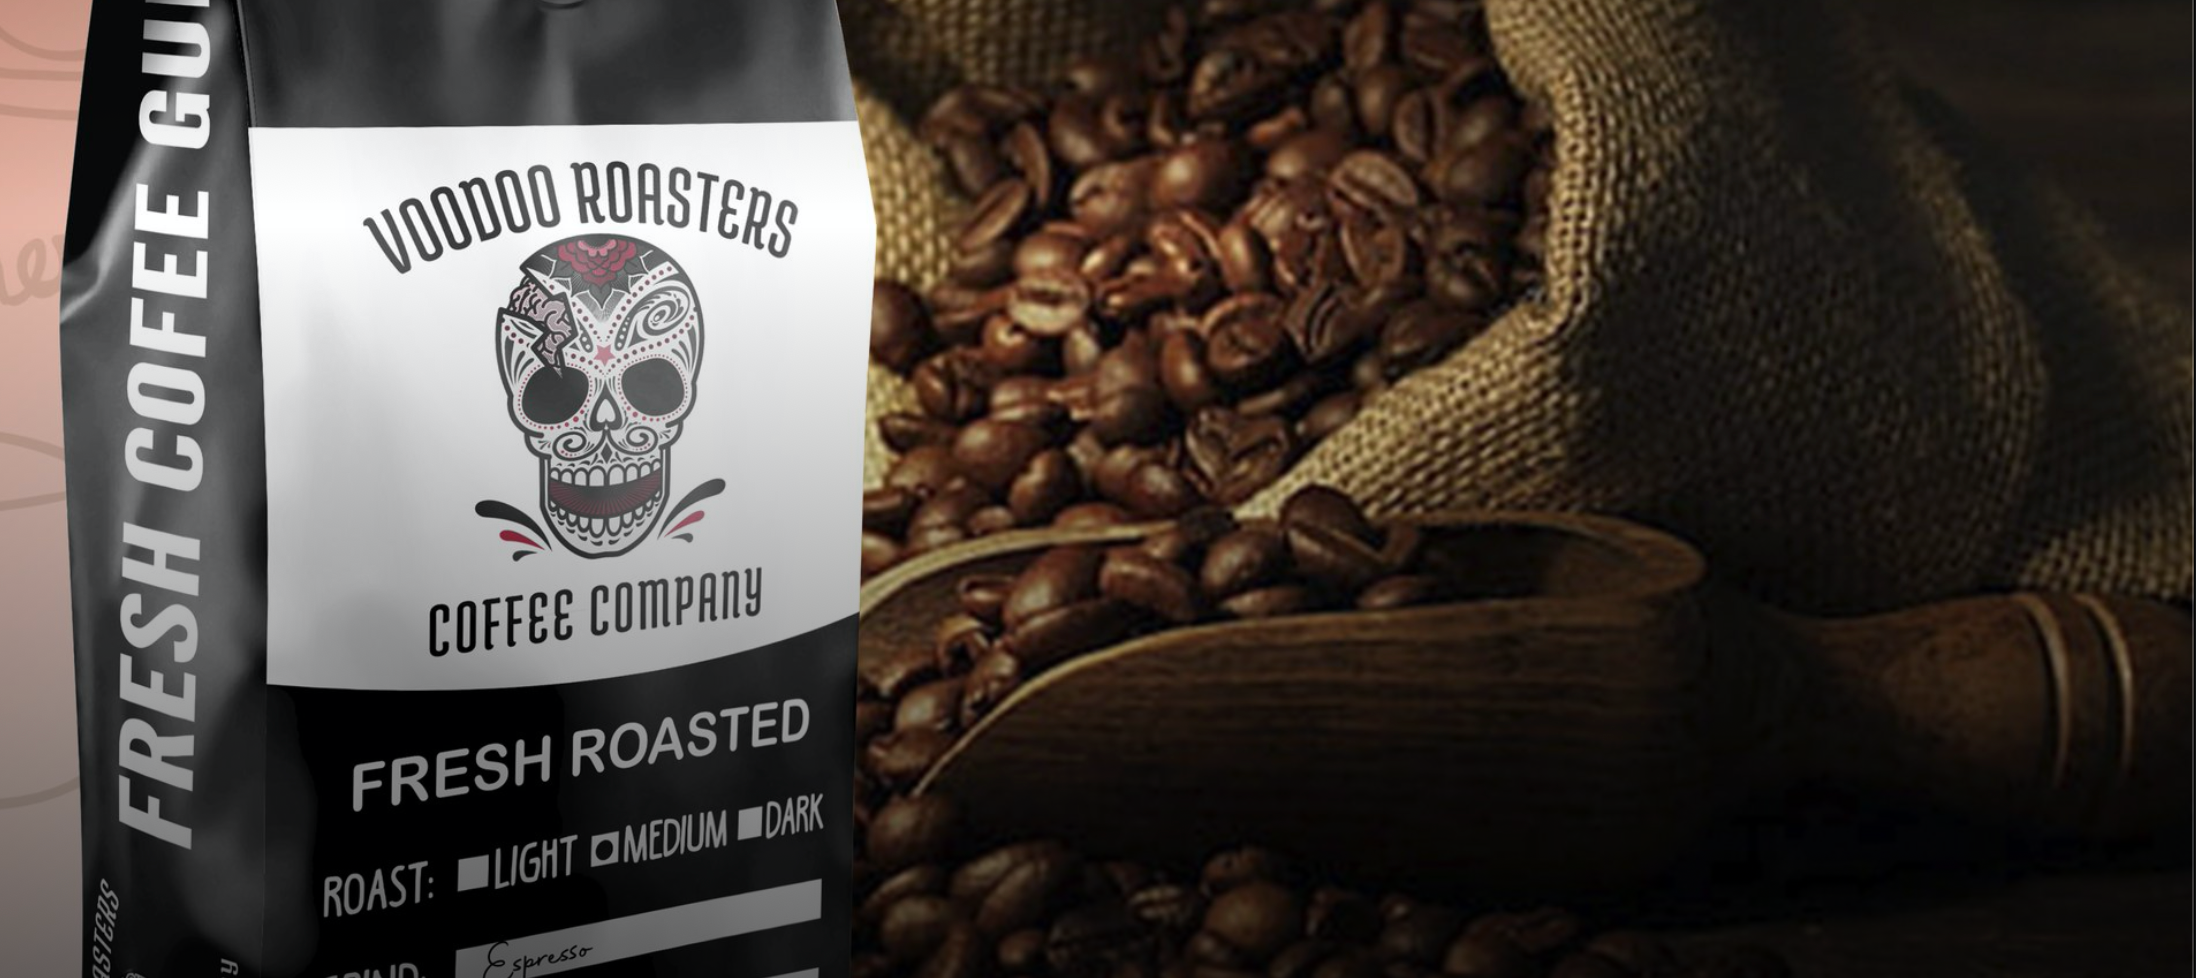 Voodoo Roasters Coffee Company